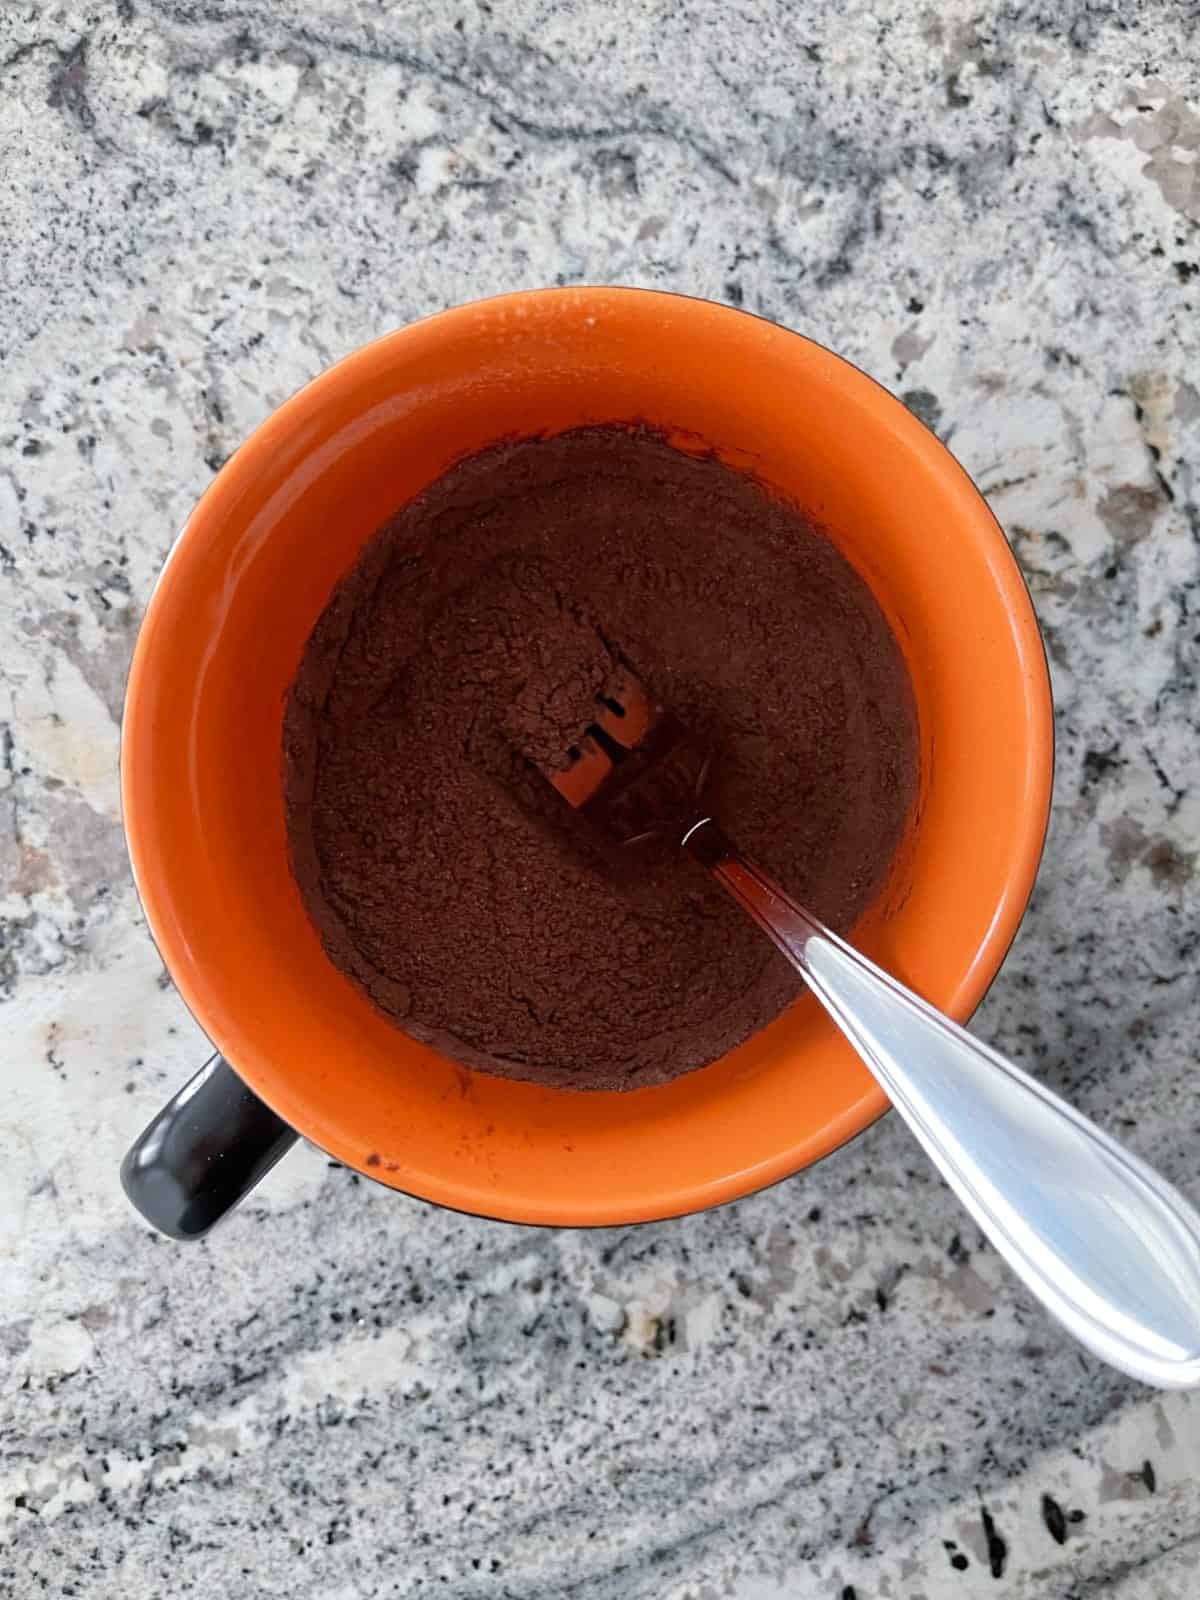 Mixing flour, cocoa powder, Truvia and baking powder with fork in orange mug.